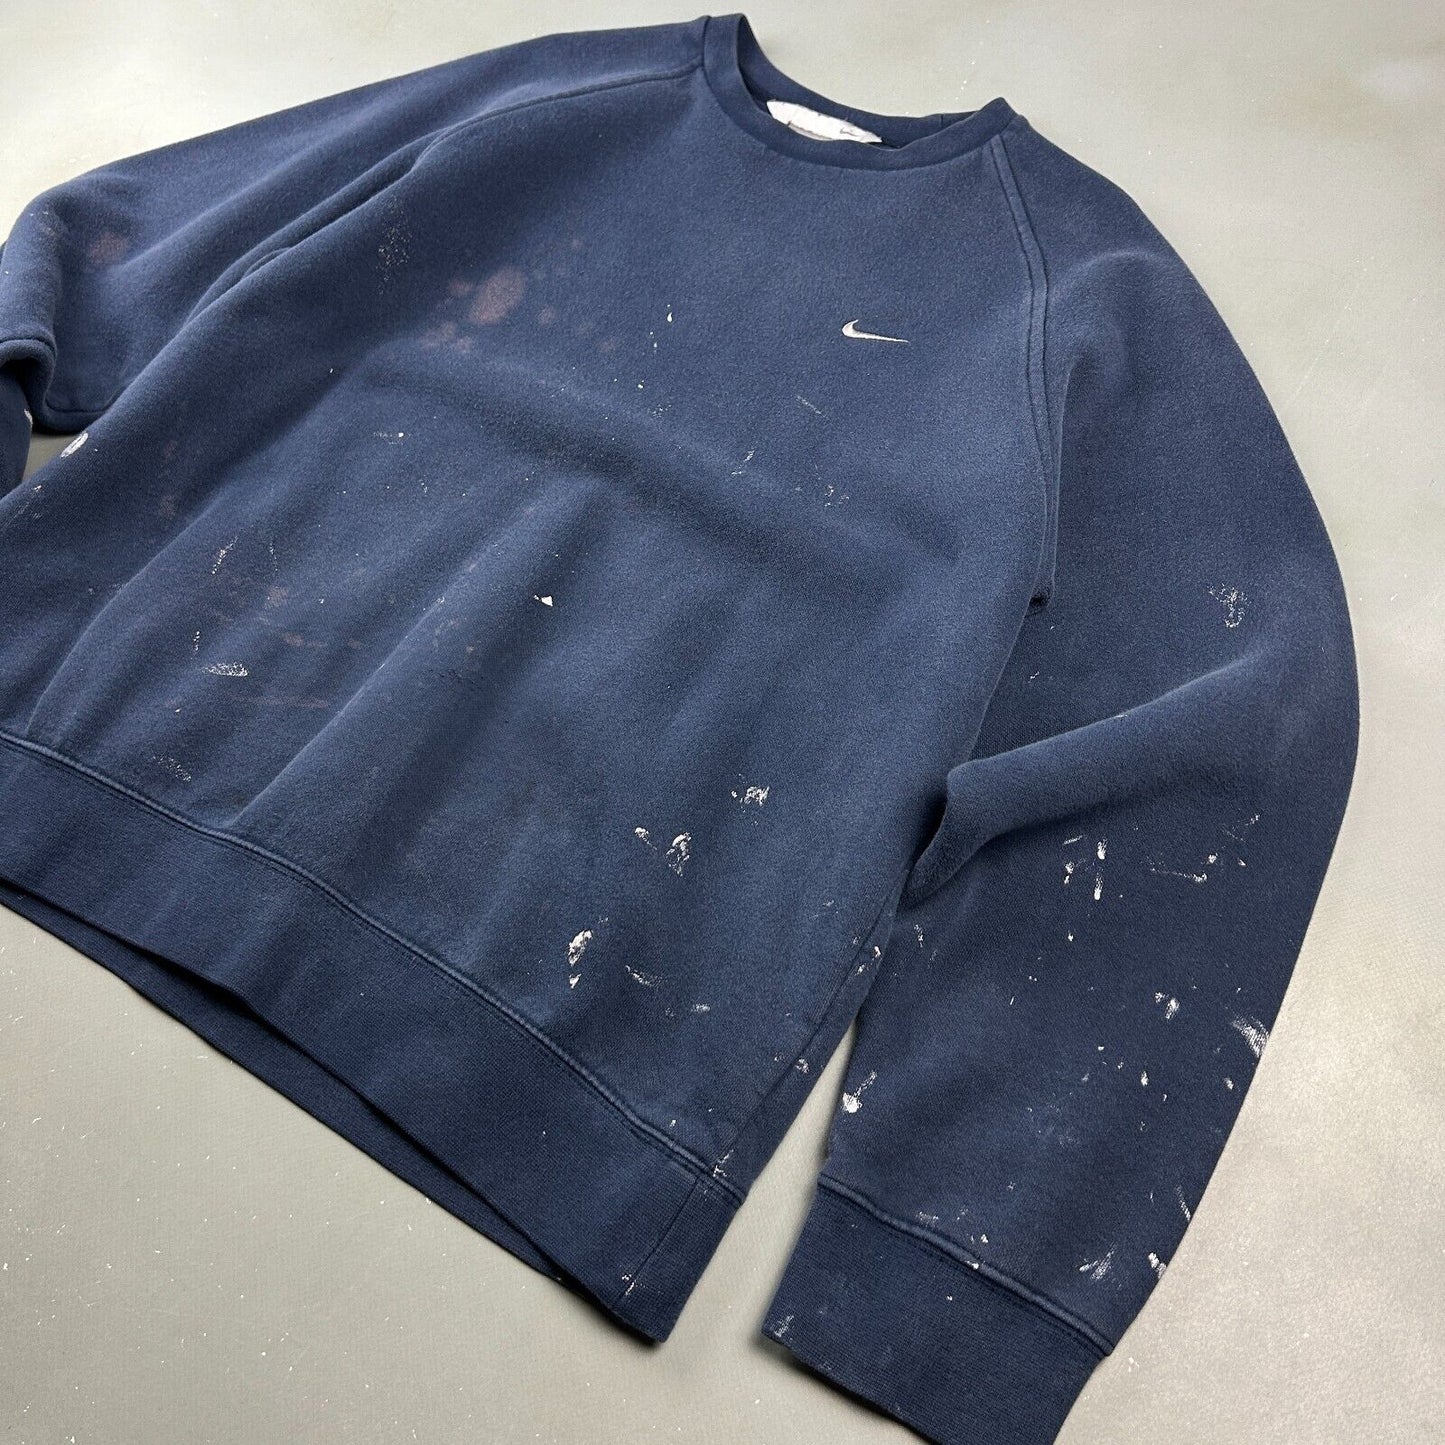 VINTAGE | NIKE Sm Swoosh Paint Splattered Navy Crewneck Sweater sz M Adult